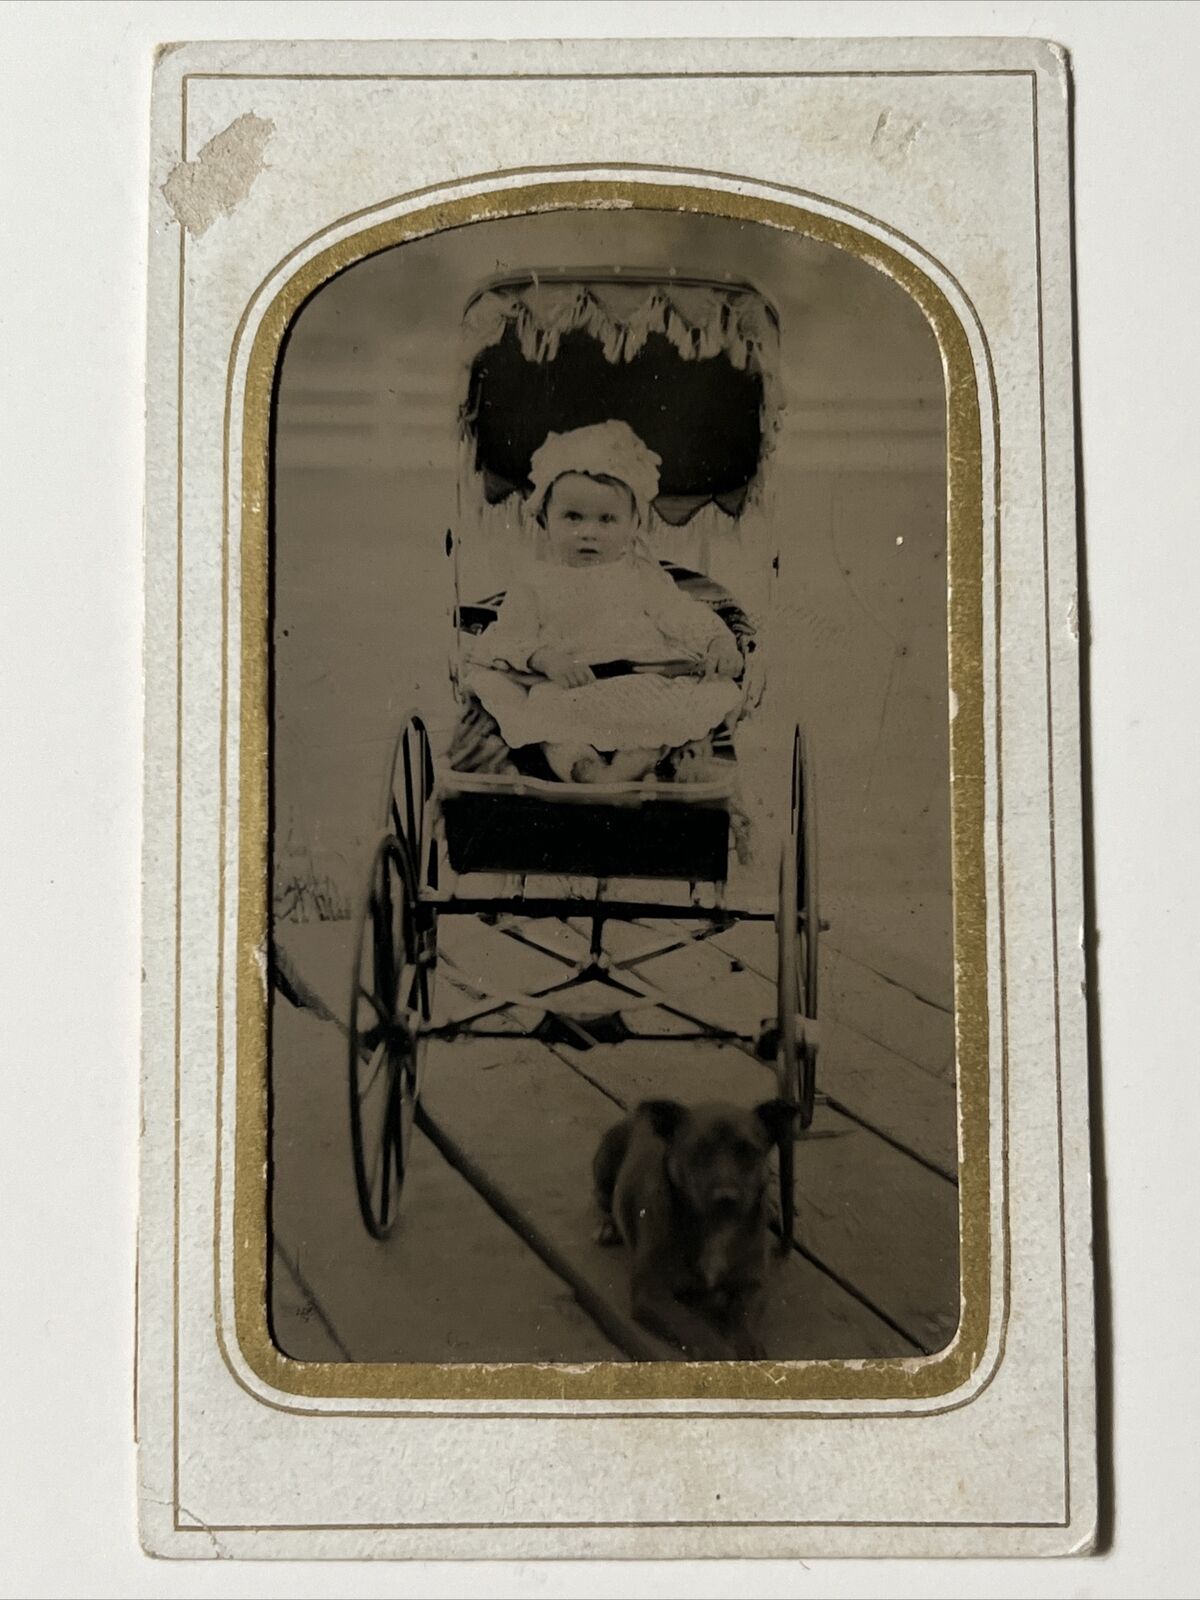 RARE BABY in PRAM w DOG porch Stroller antique 1870s Tintype Photo TIN Type